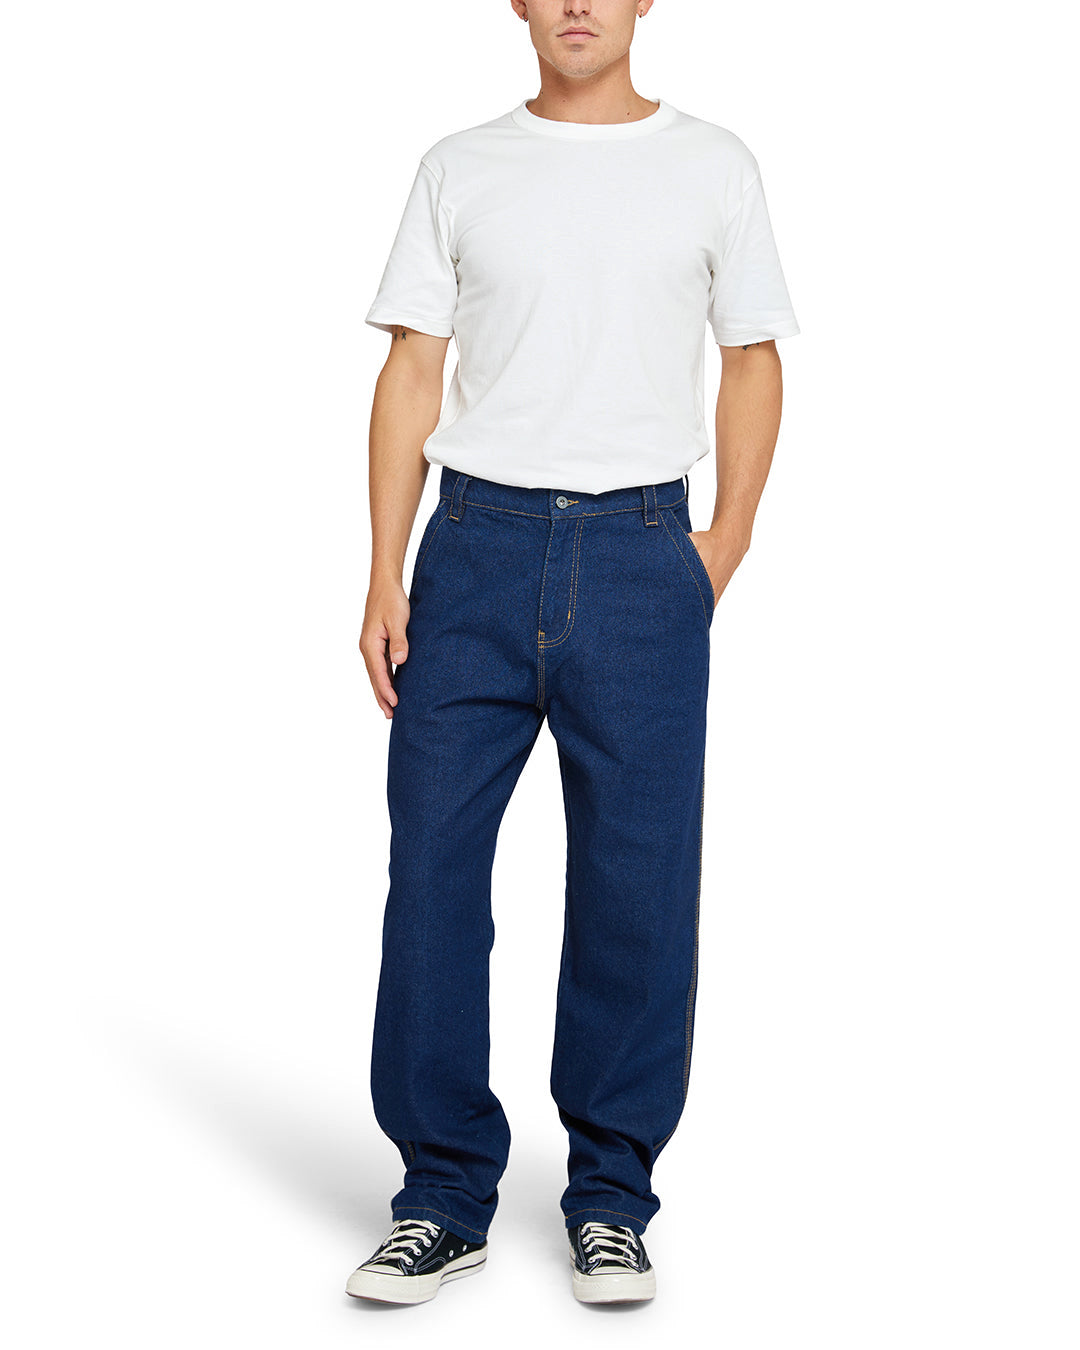 Men's indigo SKINNY fit jeans